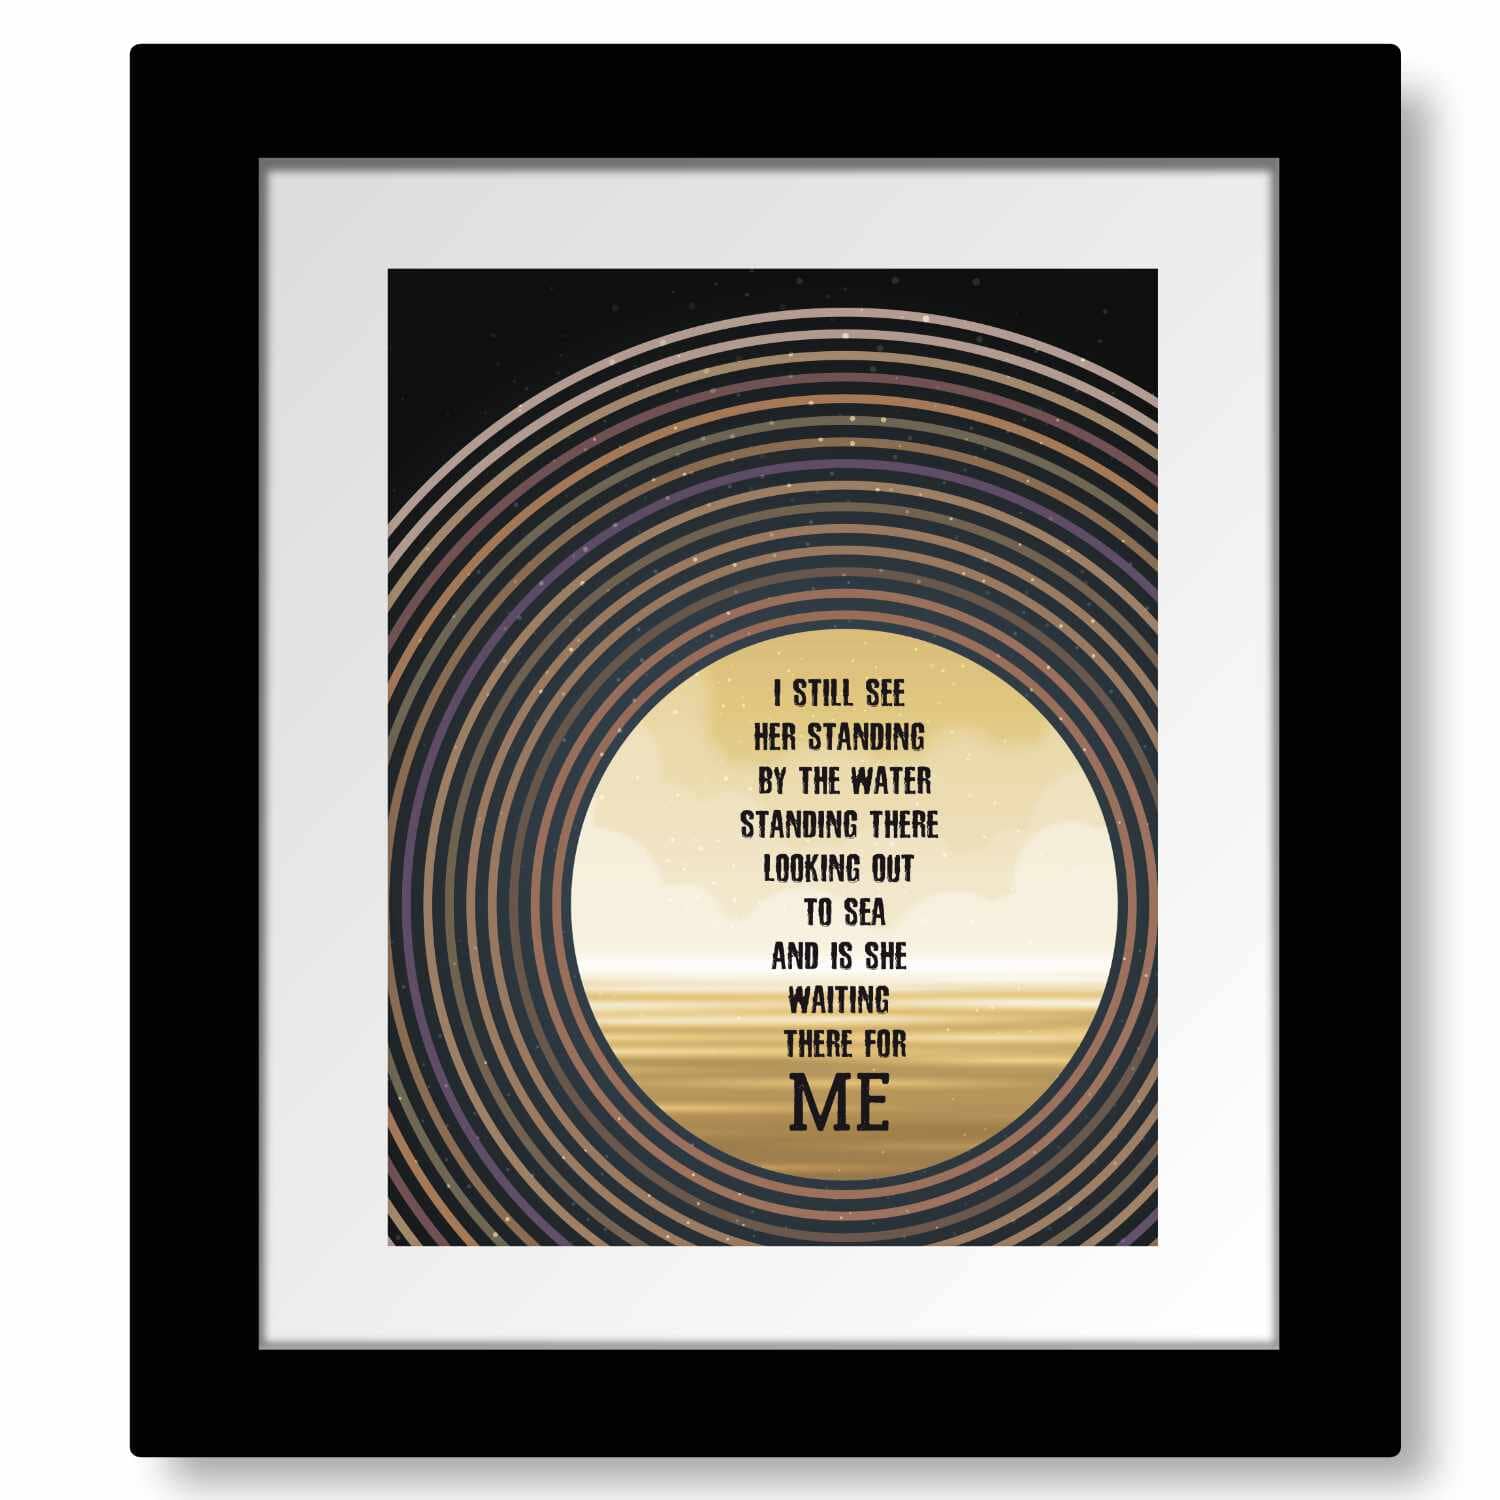 Galveston by Glen Campbell - Country Rock Music Art Print Song Lyrics Art Song Lyrics Art 8x10 Matted and Framed Print 